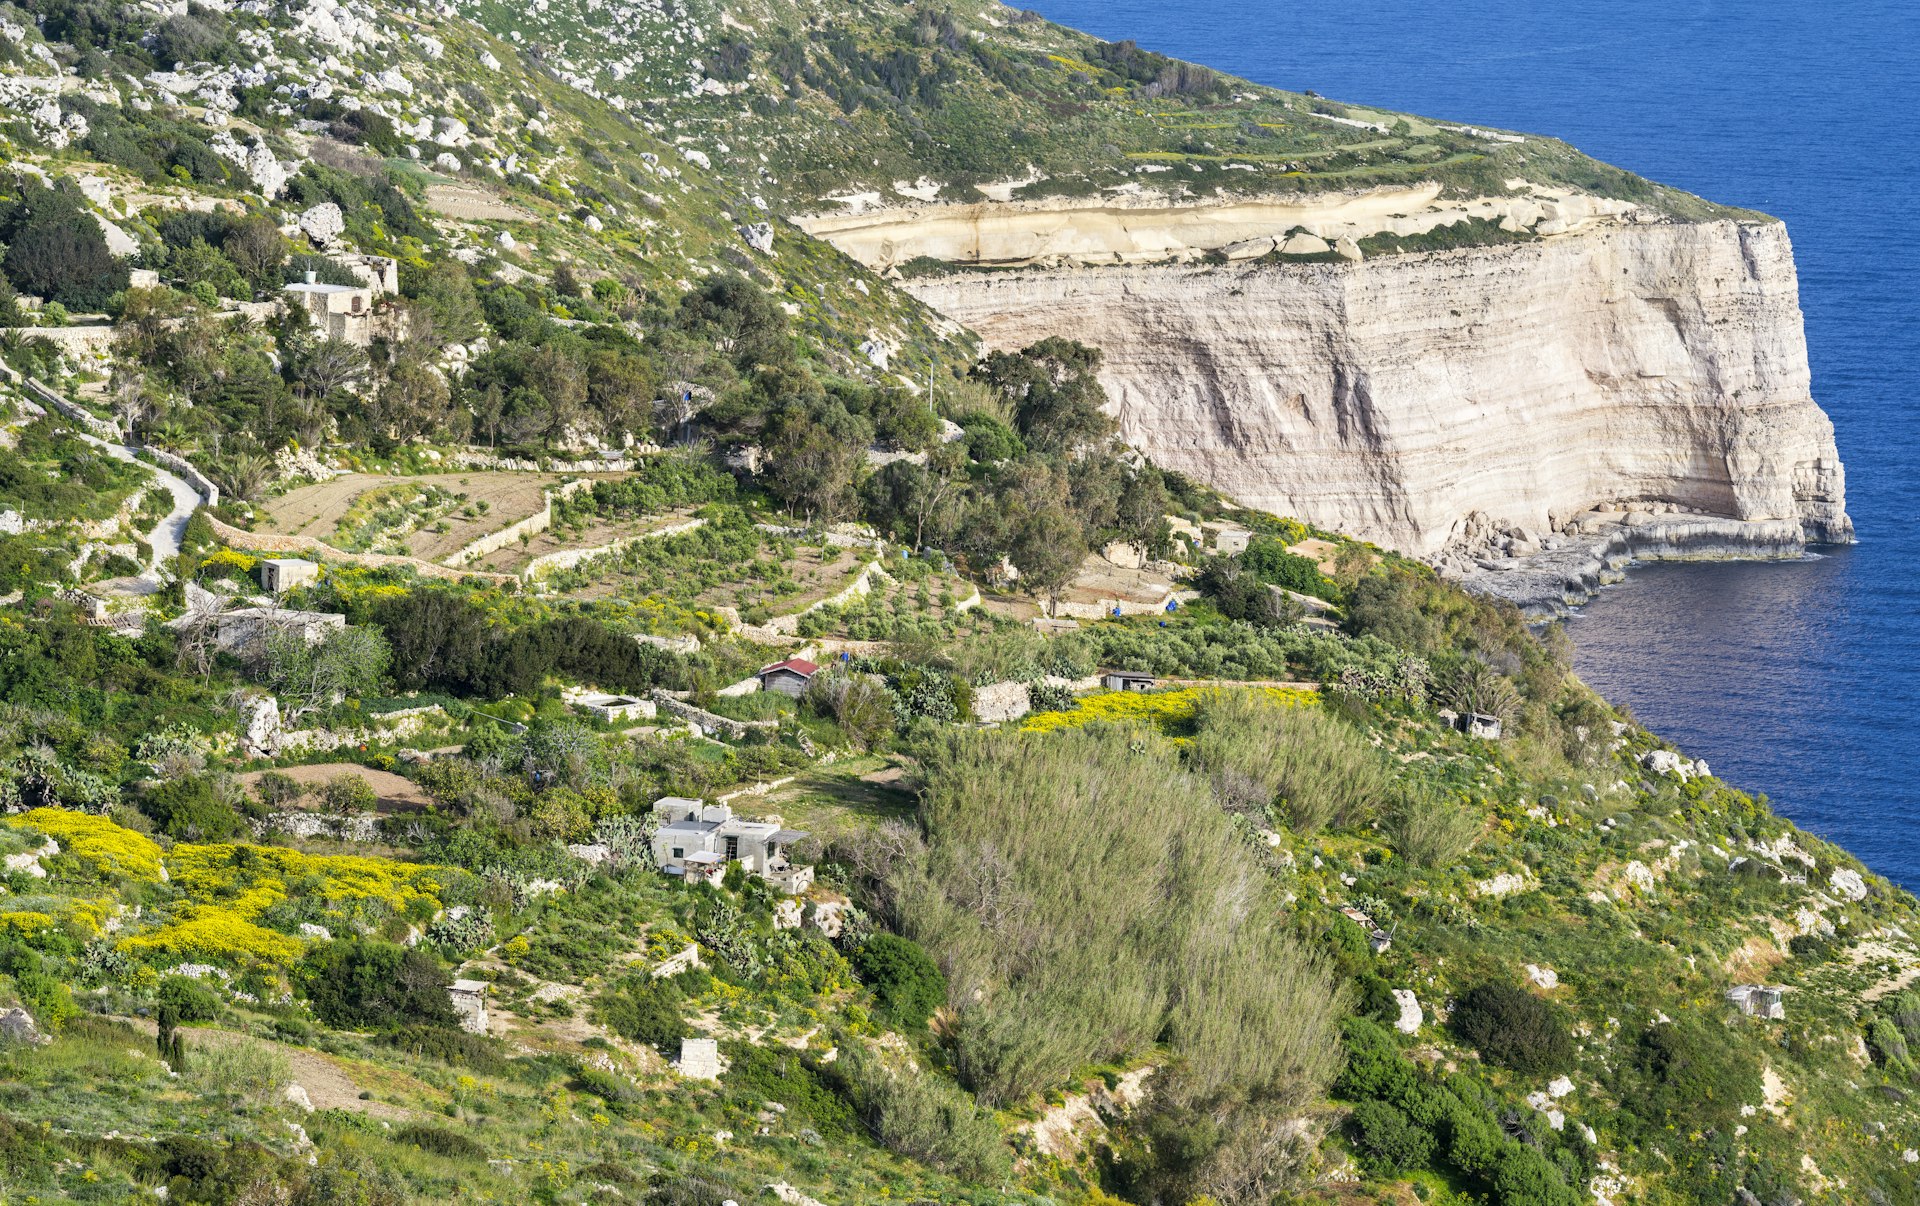 A view of the 200m-high Dingli Cliffs above the Mediterranean Sea, Malta, Europe